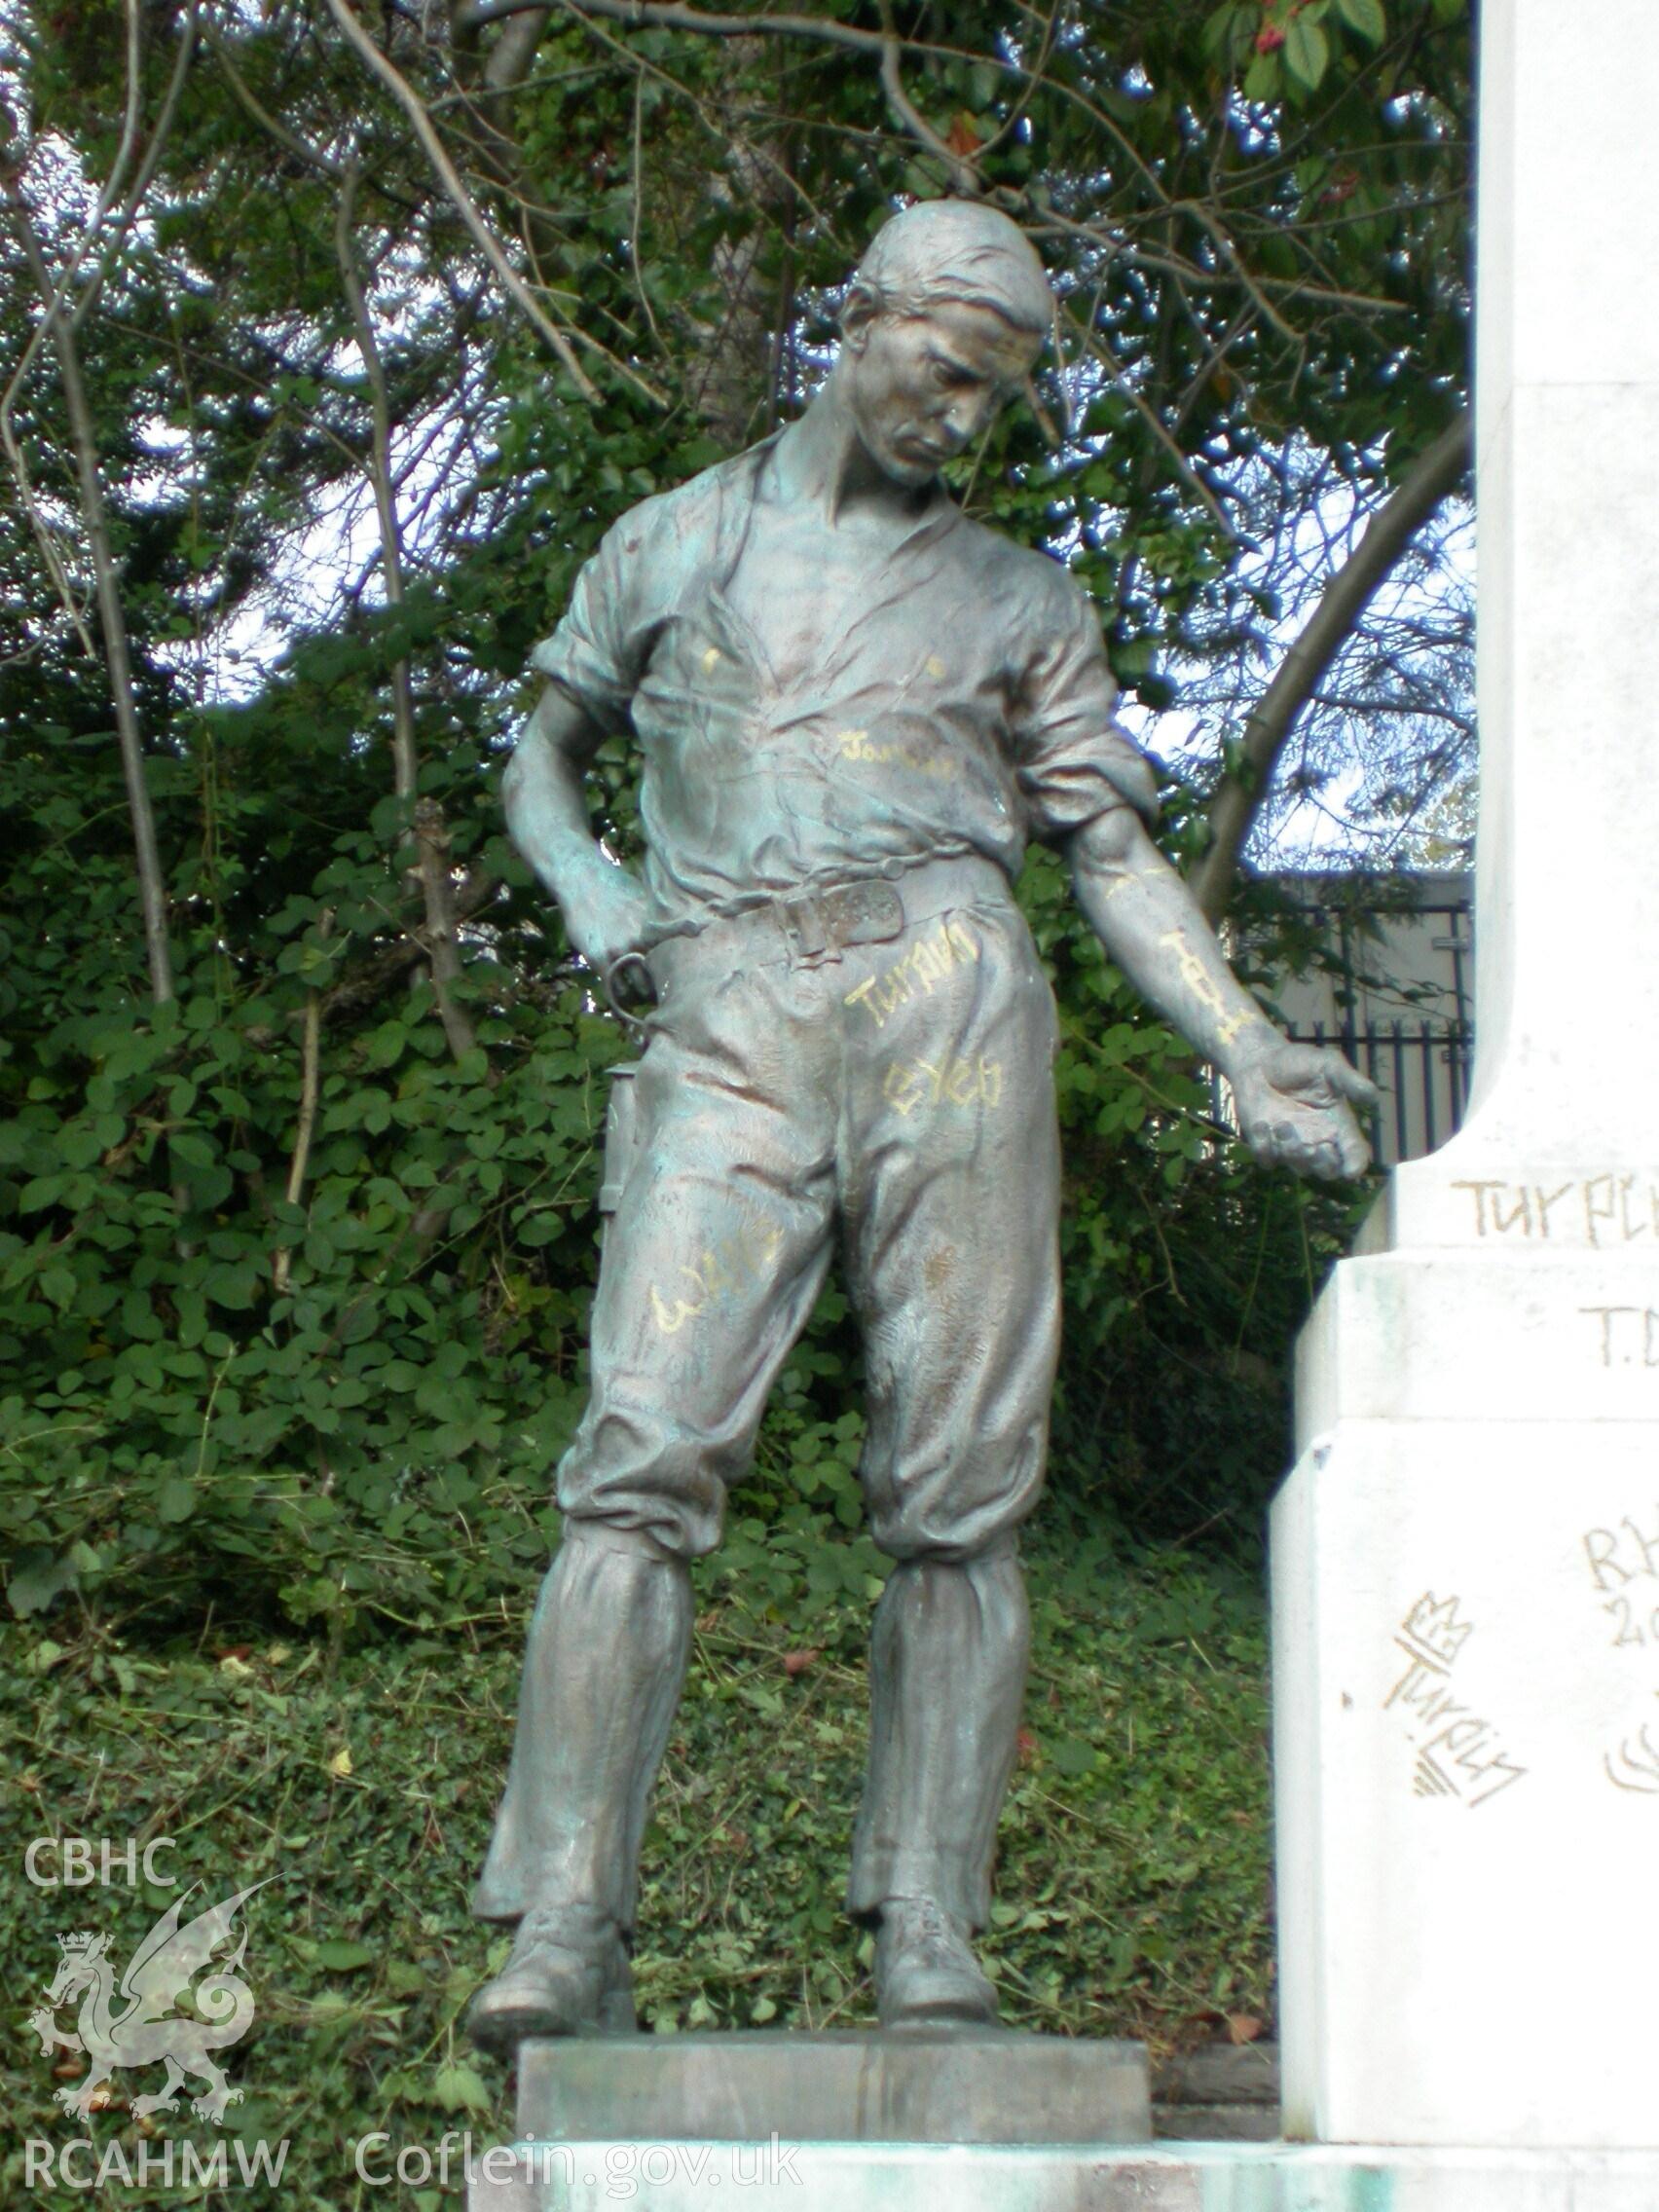 Detailed view of male figure on the Merthyr Tydfil War Memorial in Pontmorlais, Merthyr Tydfil. Produced by Geoff Ward of RCAHMW.